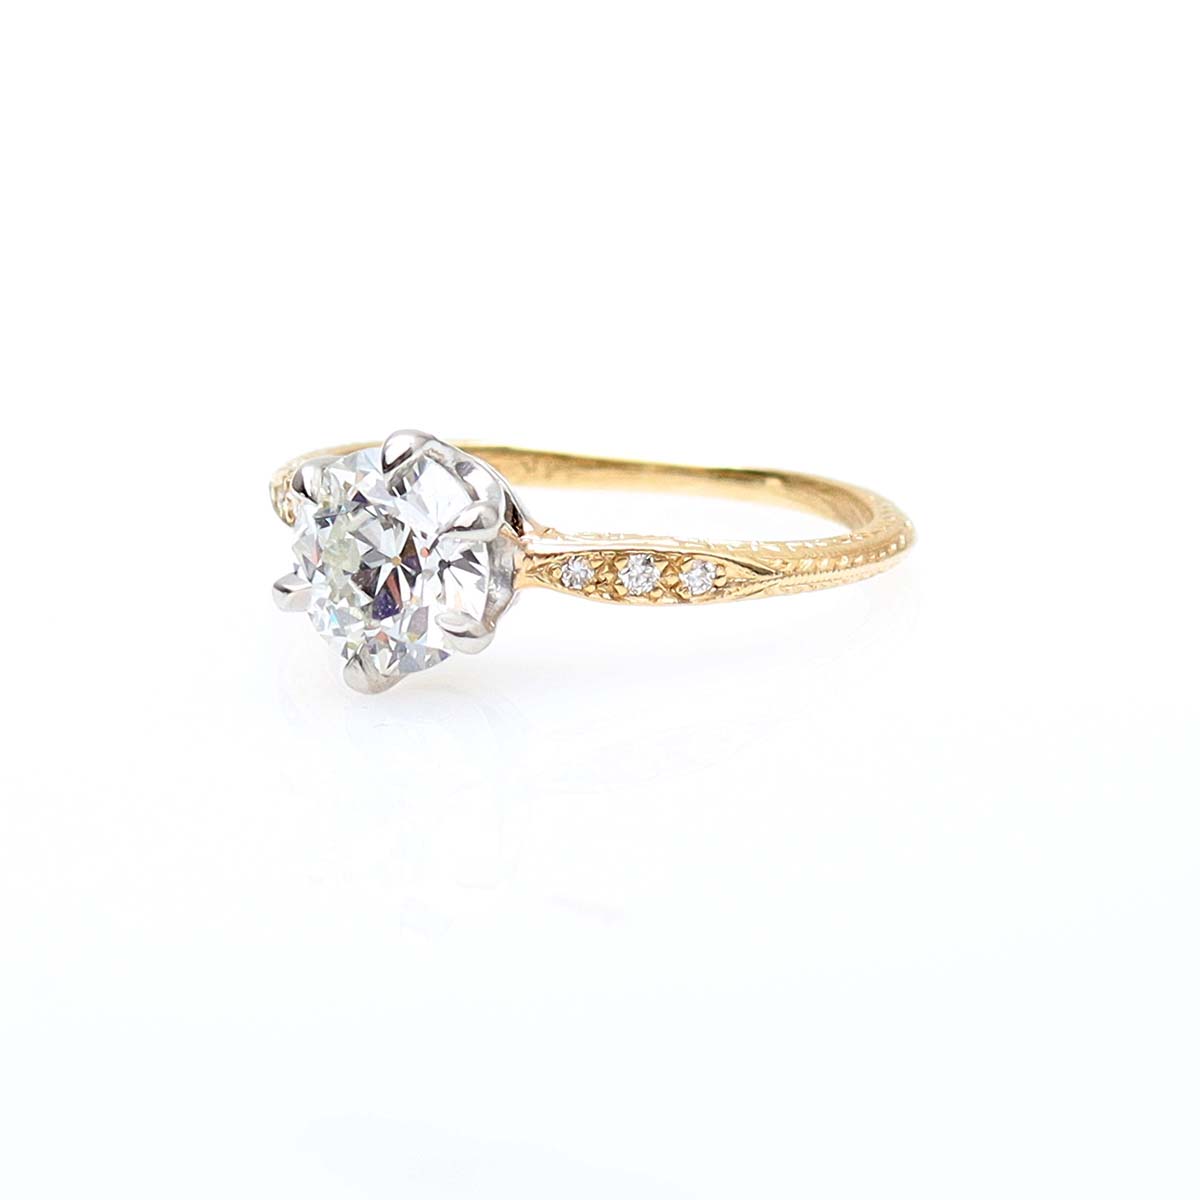 Edwardian Revival Engagement Ring #3604-3